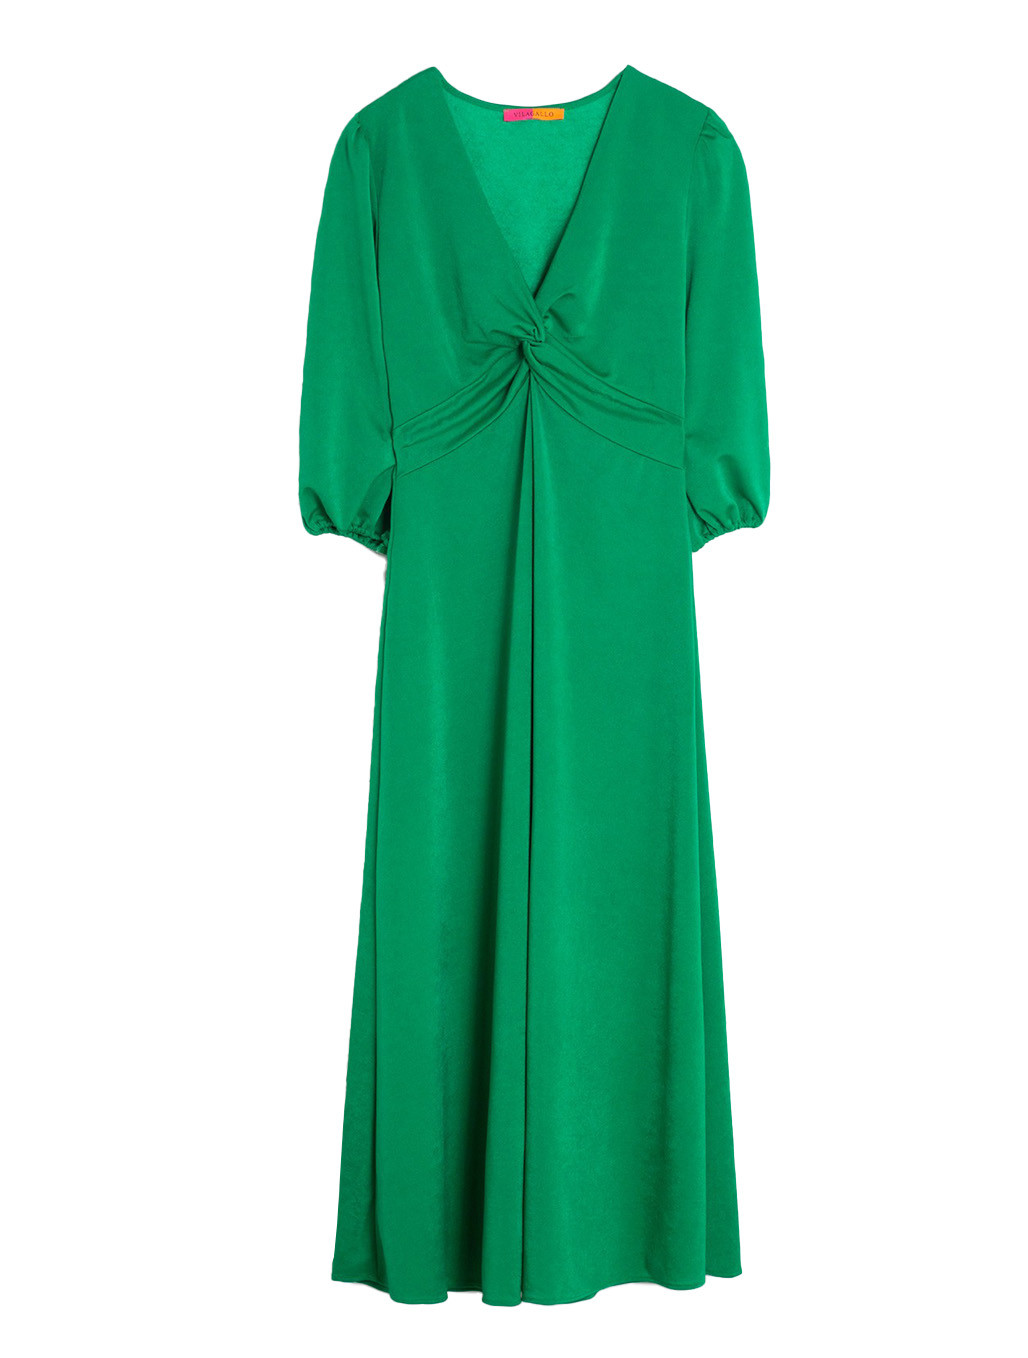 Long Knit Green Dress | Vilagallo